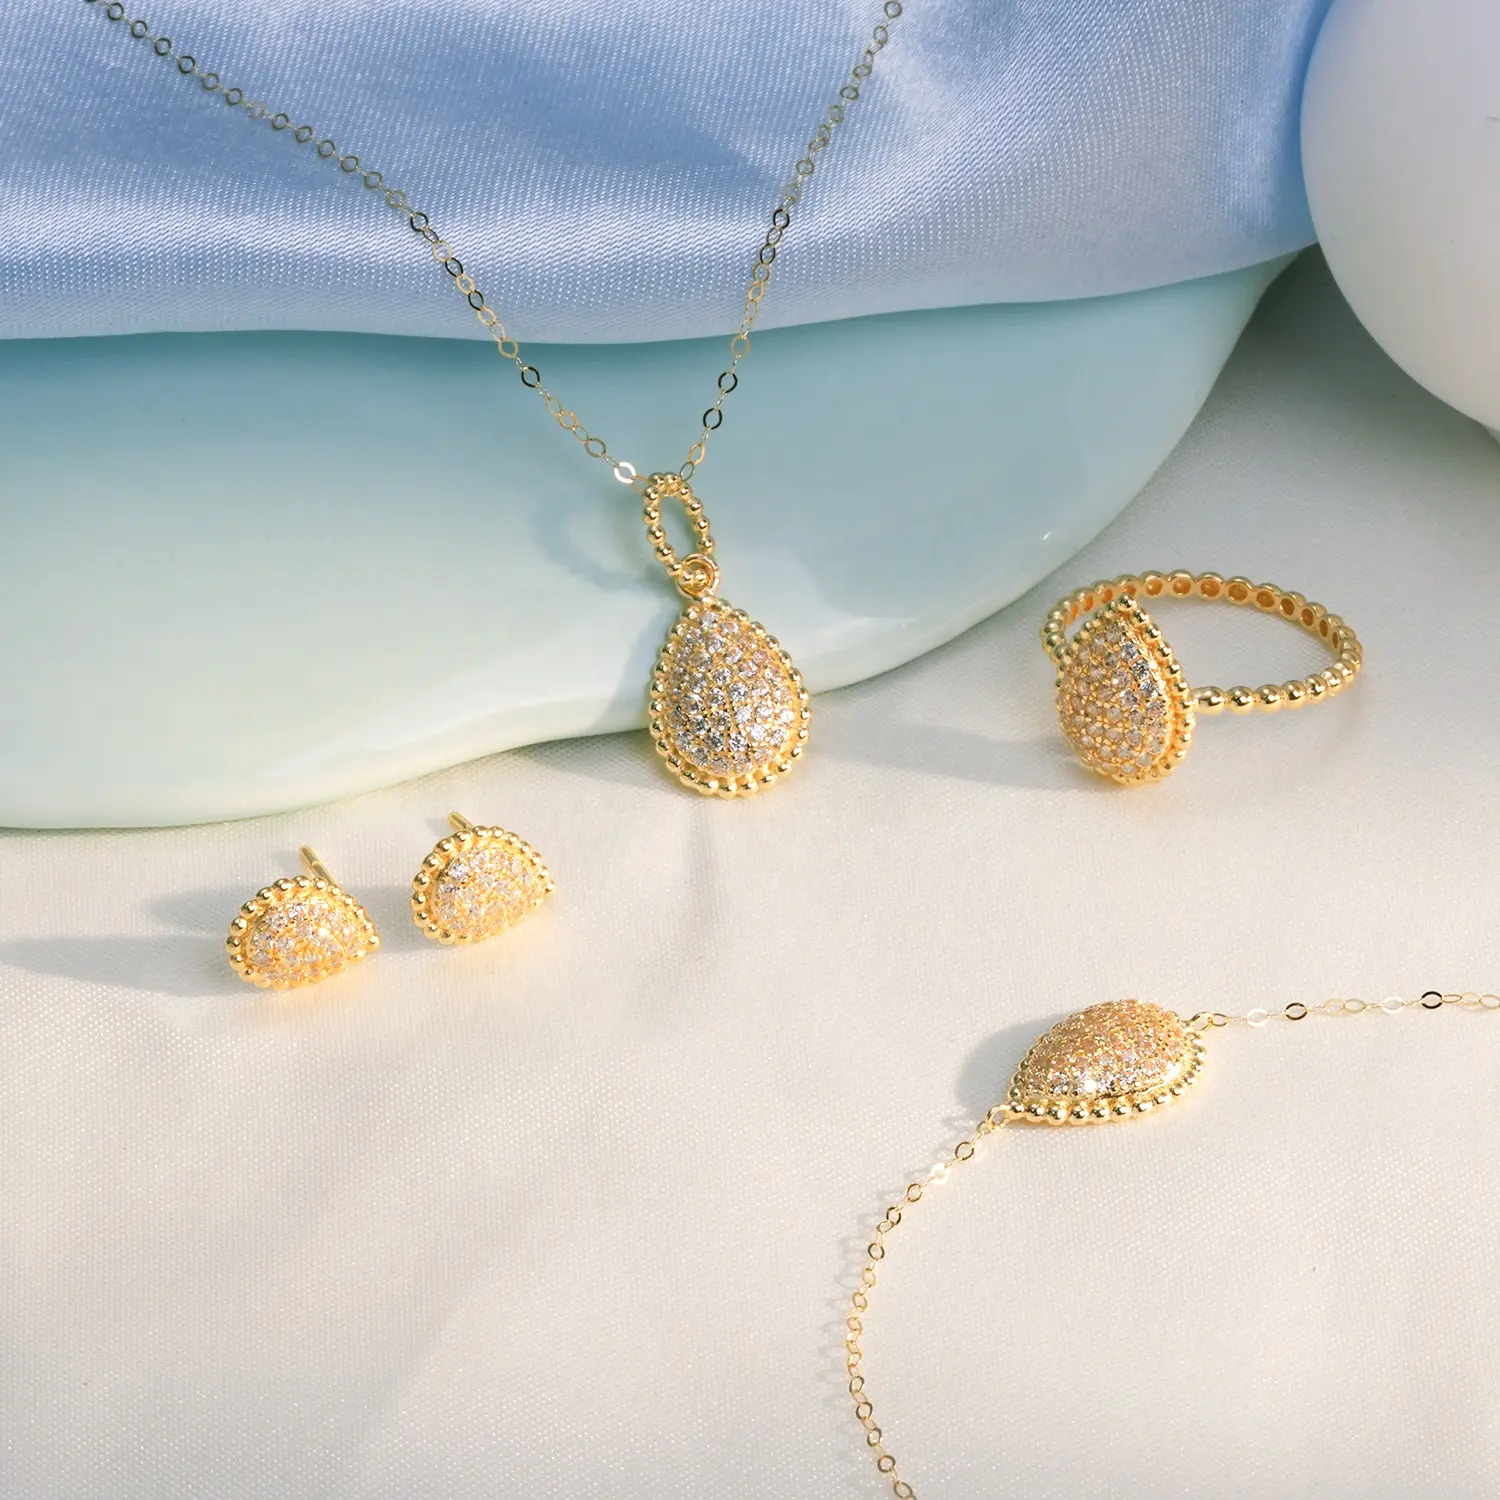 Liontin berlian zirkon bentuk tetesan air gelang rantai tulang selangka anting emas 18k cincin manik-manik bulat set perhiasan halus wanita